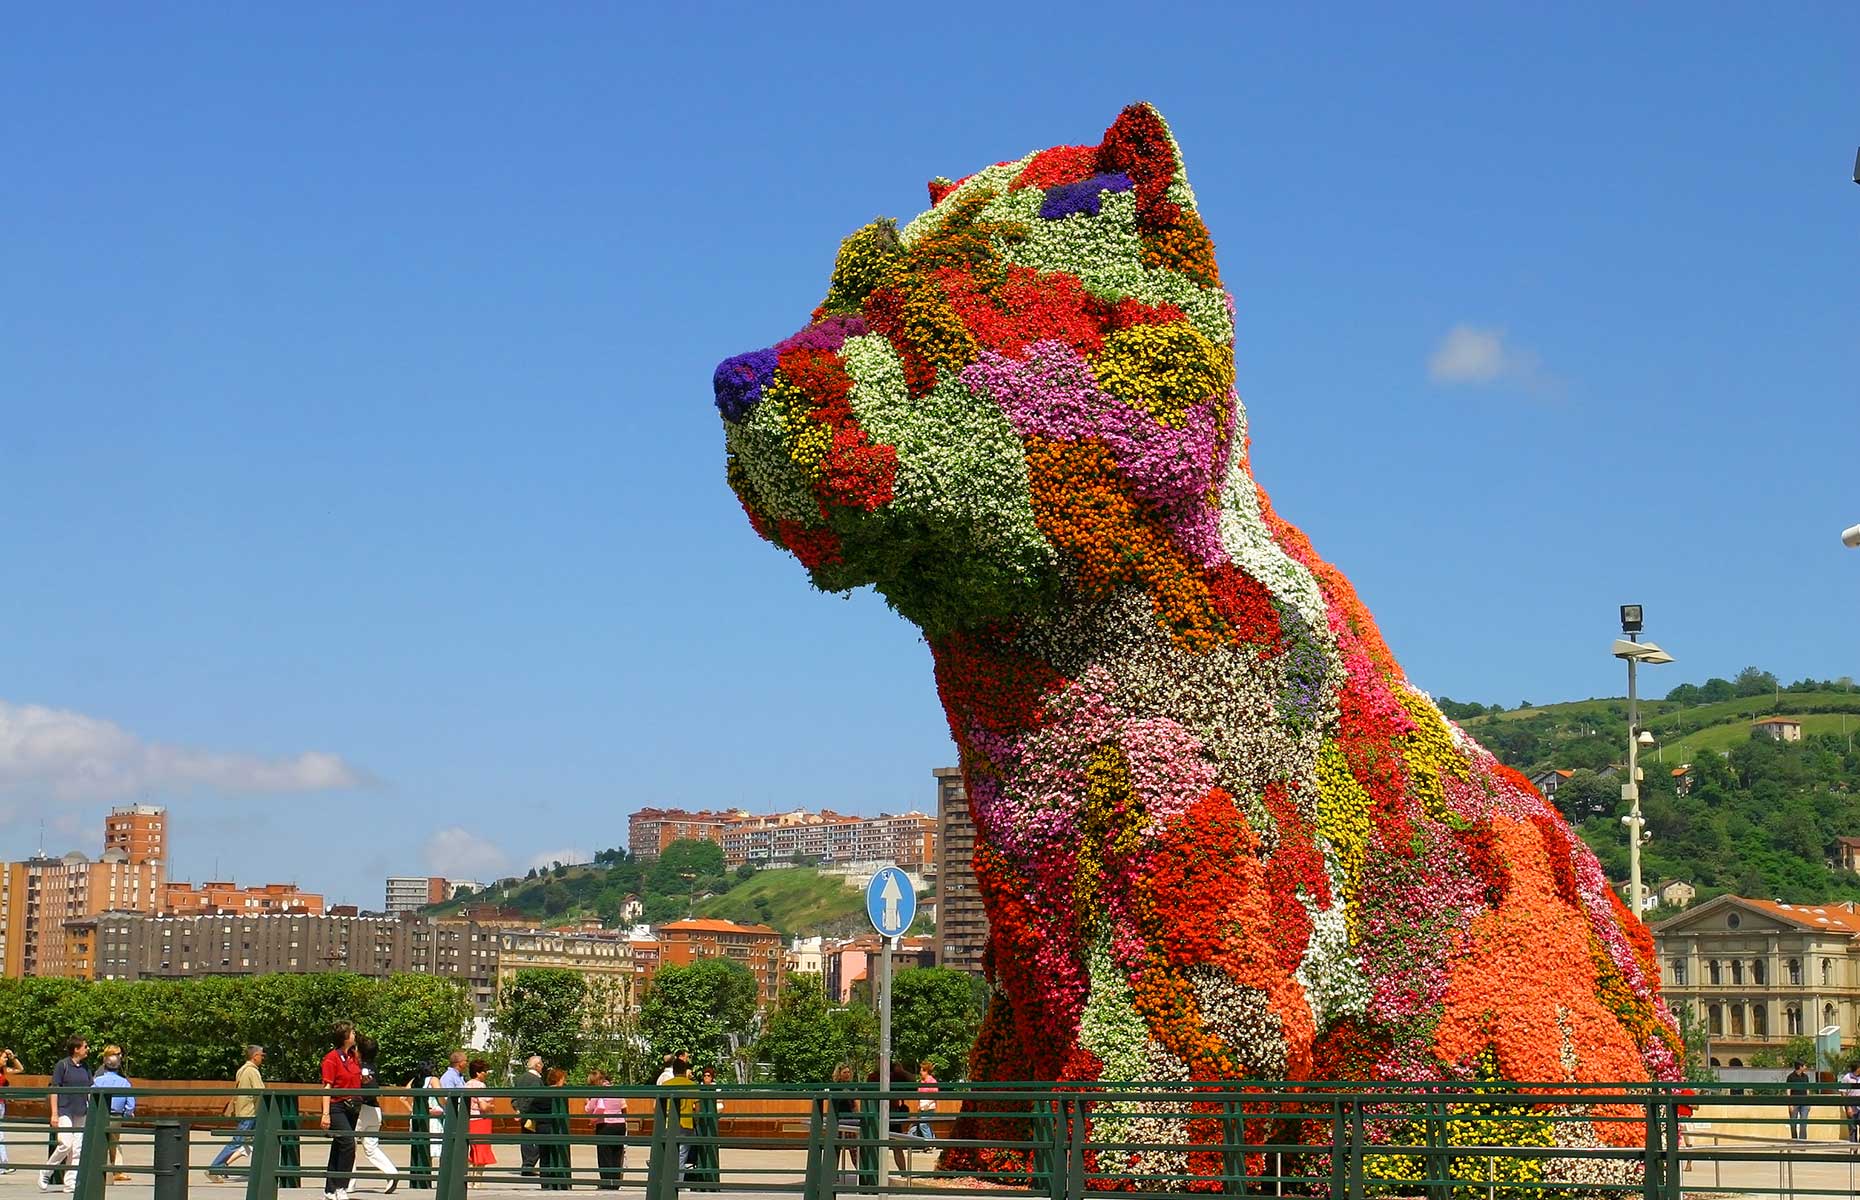 Jeff Koon's Puppy is one of Bilbao's most stunning artworks (Image: Pixachi/Shutterstock)